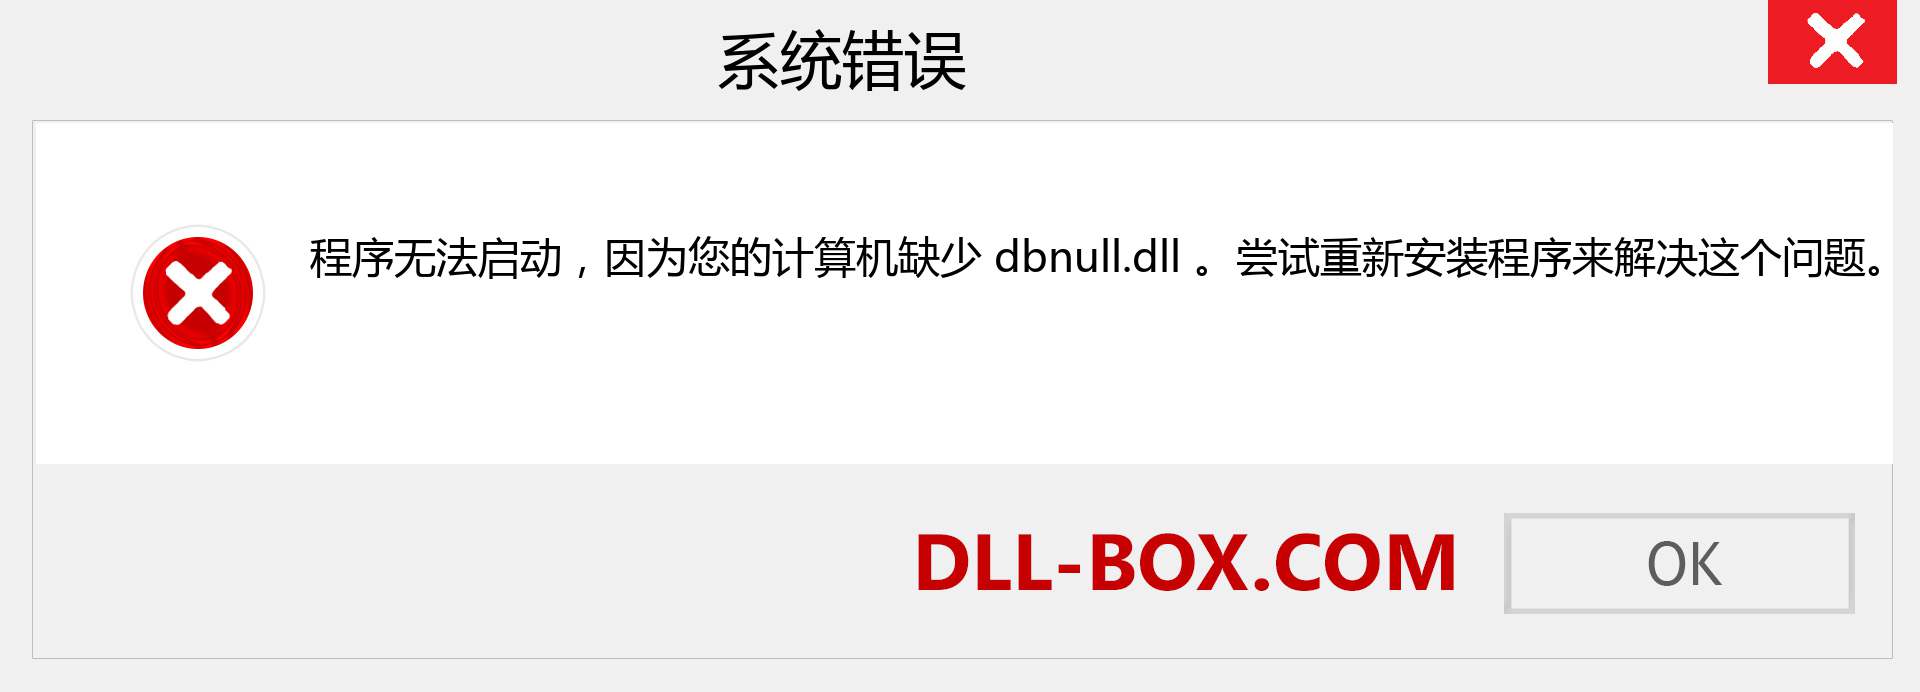 dbnull.dll 文件丢失？。 适用于 Windows 7、8、10 的下载 - 修复 Windows、照片、图像上的 dbnull dll 丢失错误